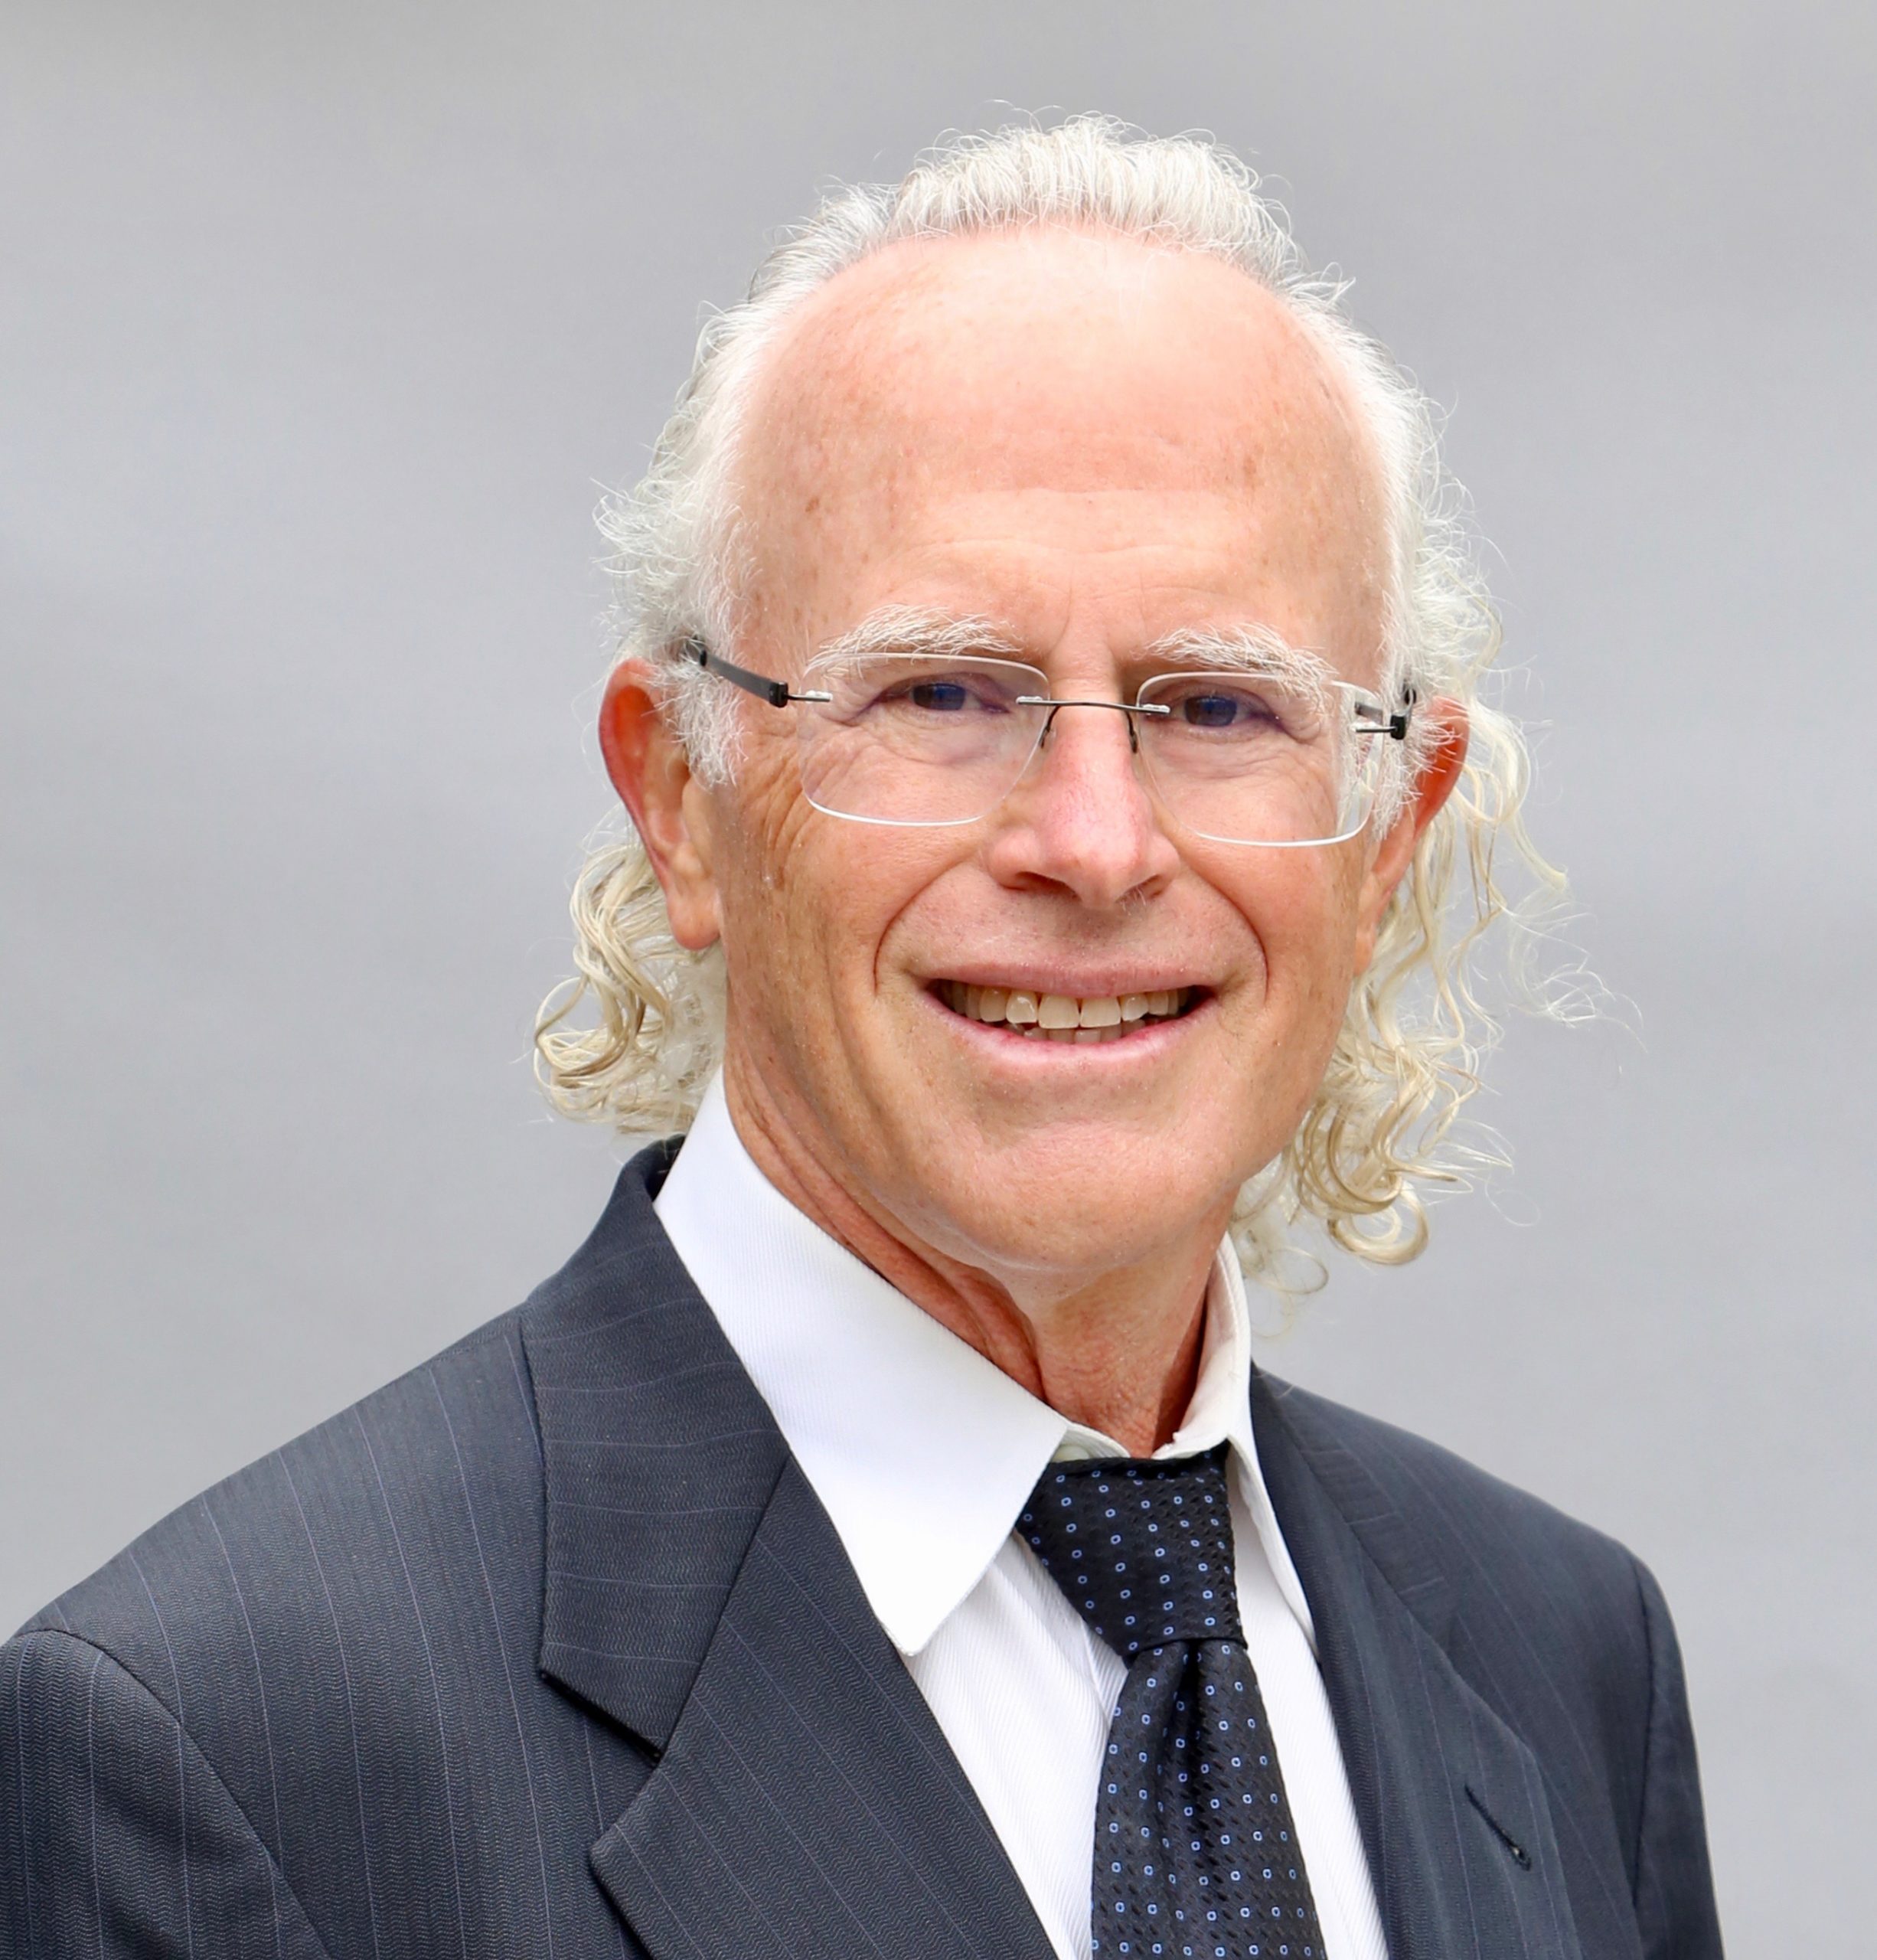 Eldercare Advocate & Geriatrician Dr. Mike Wasserman On SeniorsSTRAIGHTTalk